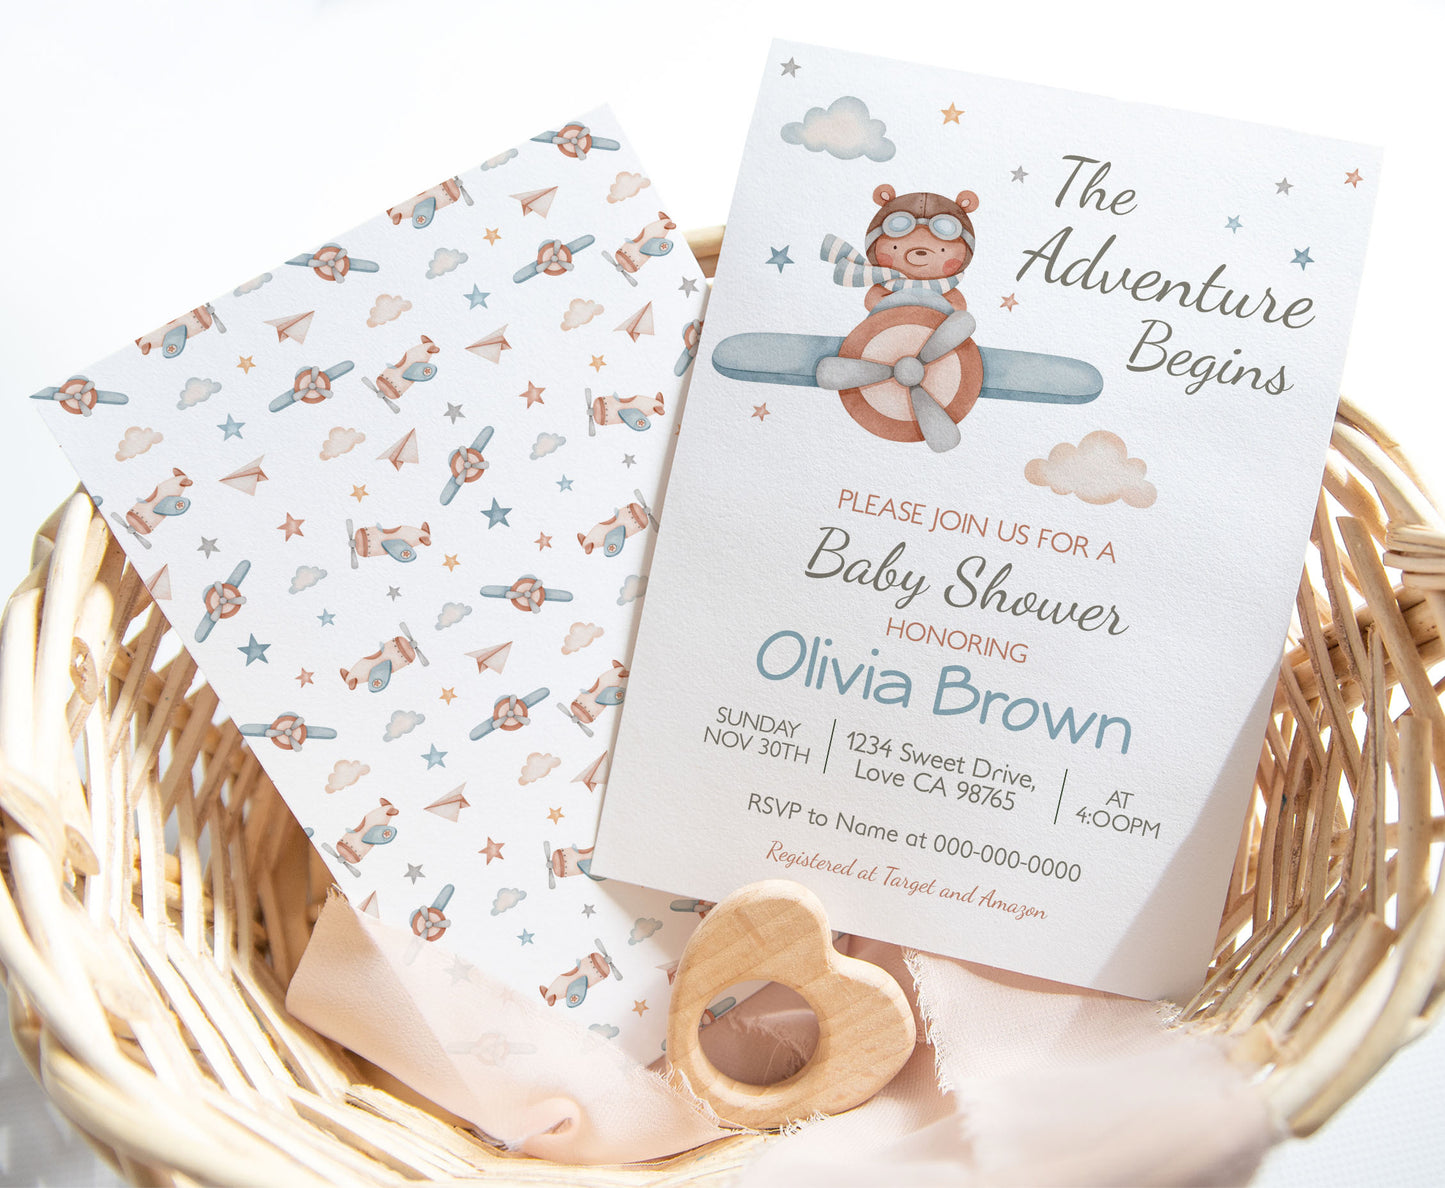 Aviator baby shower invitation | Editable The adventure begins boy baby shower invite - 76C